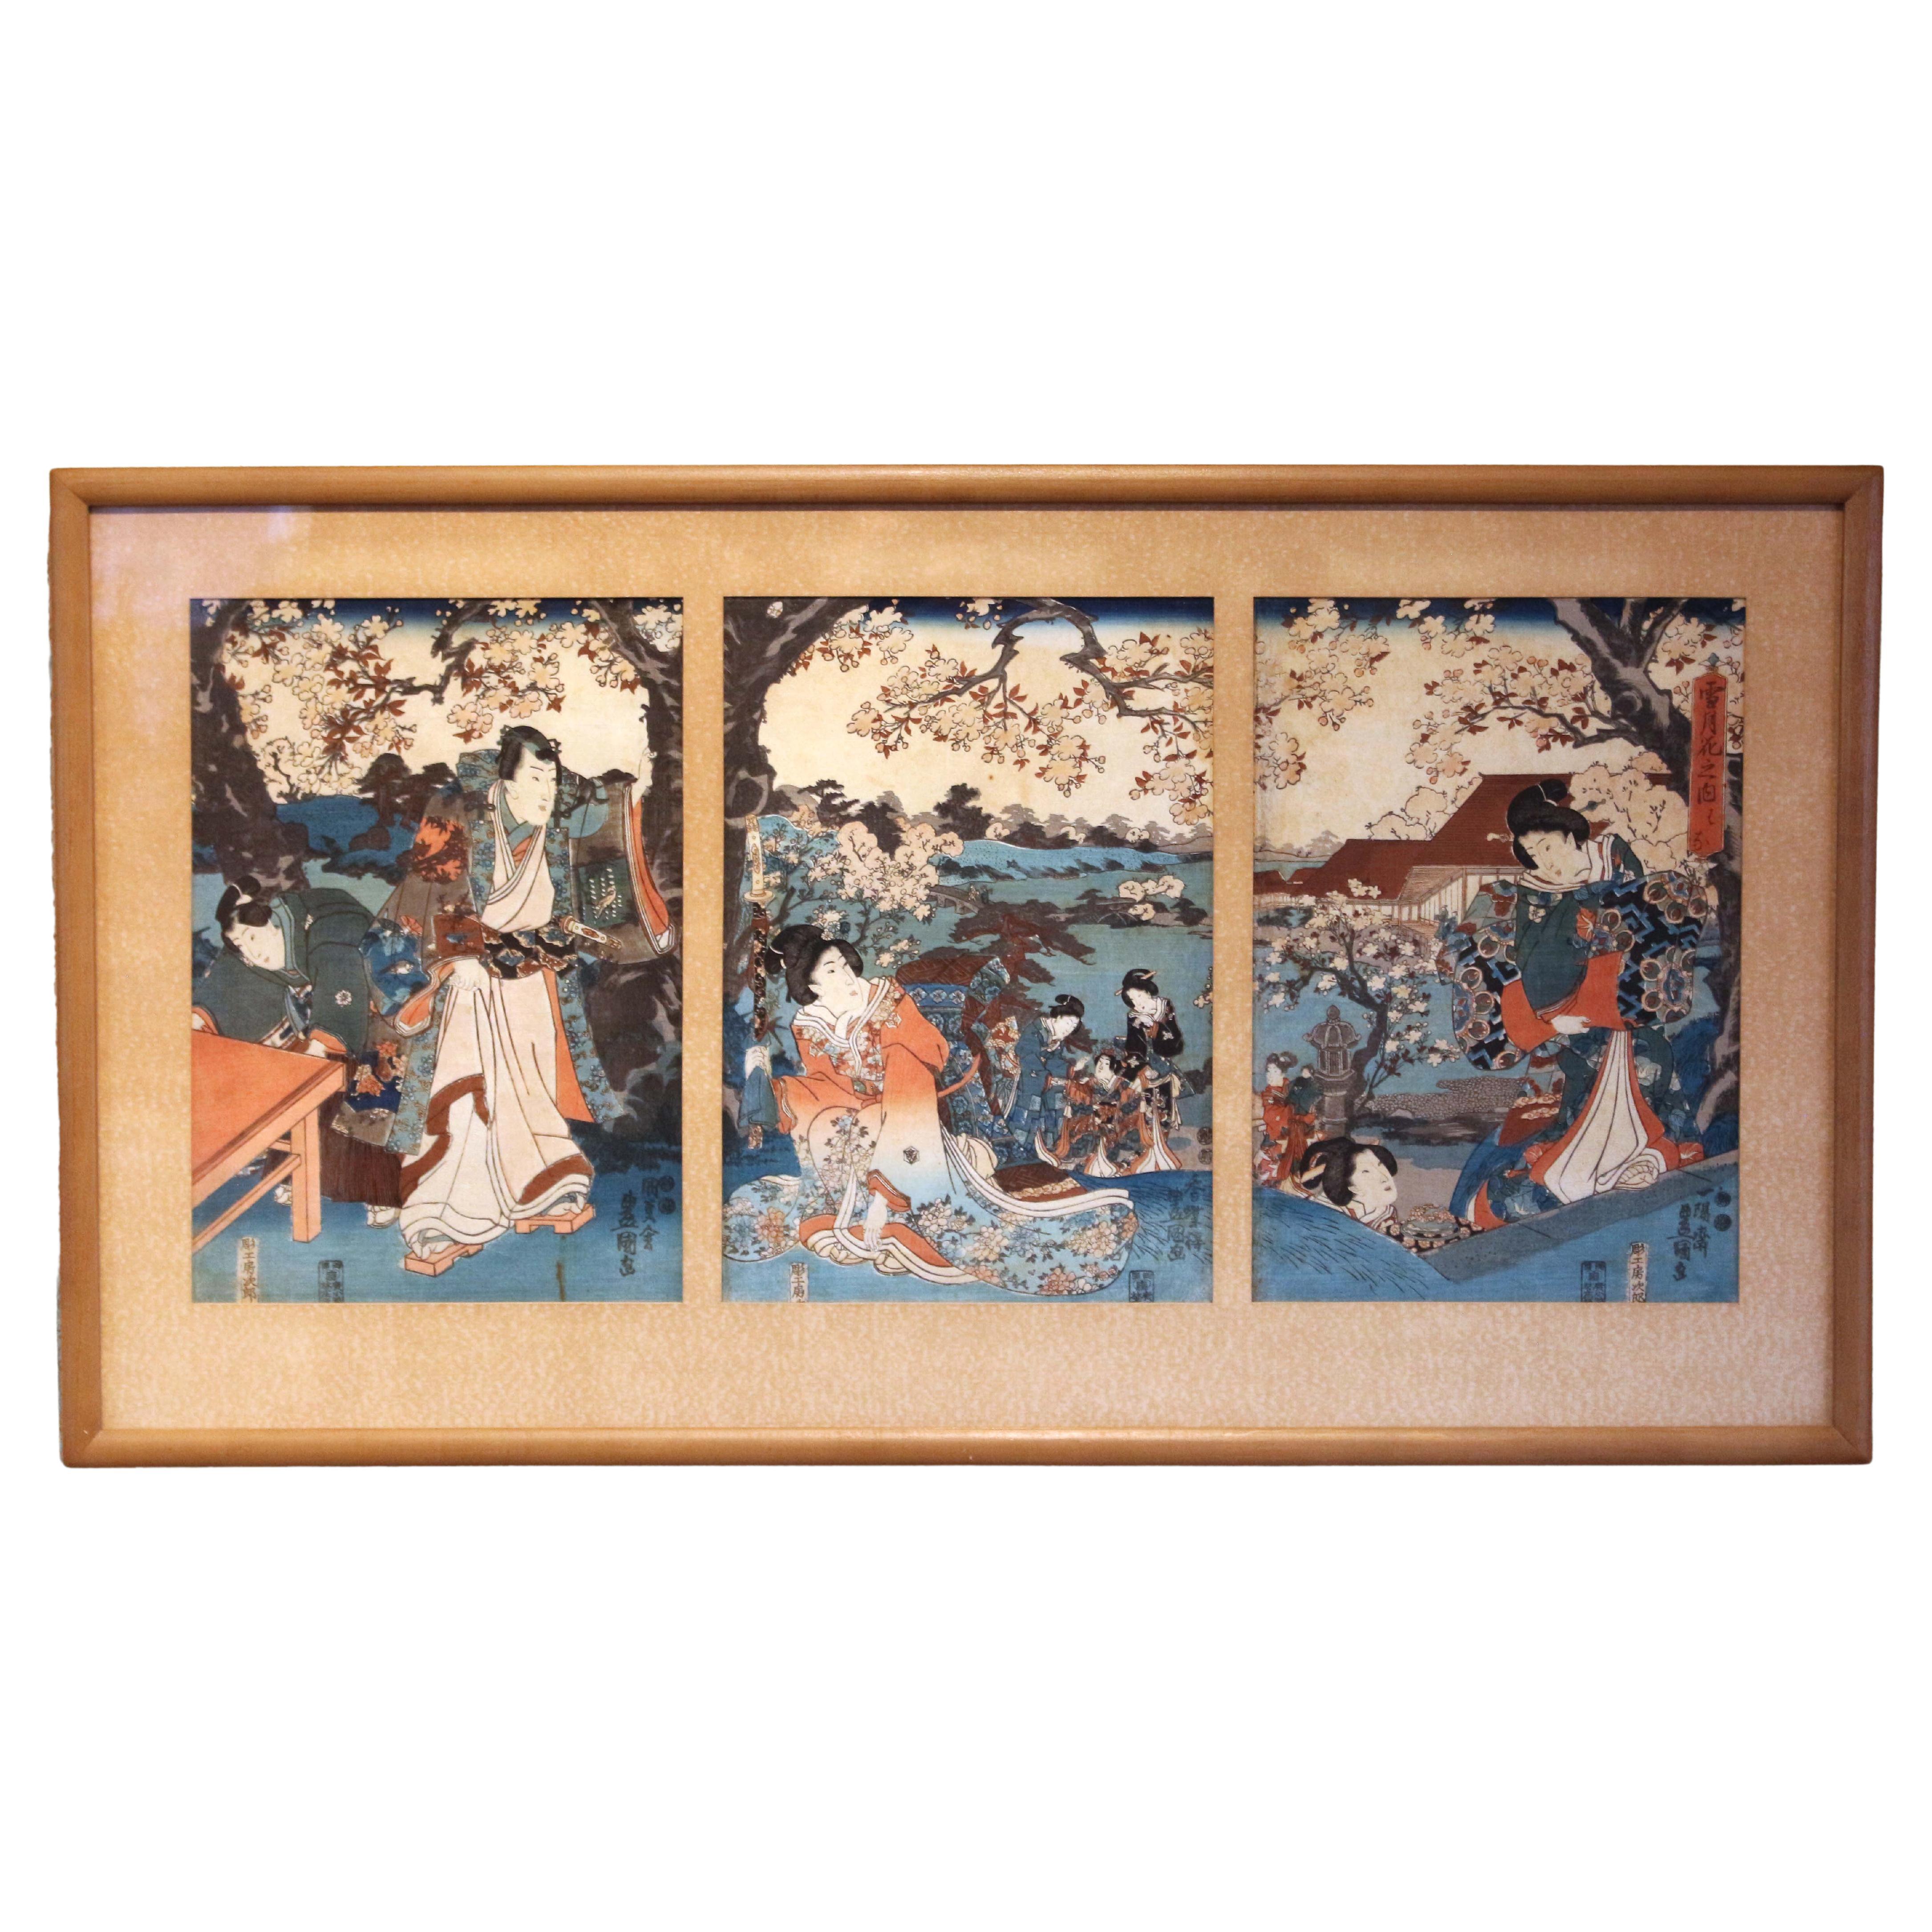 Utagawa Kunisada Holzschnitt-Blumen im Holzschnitt (Hana) Triptychon, um 1847-52